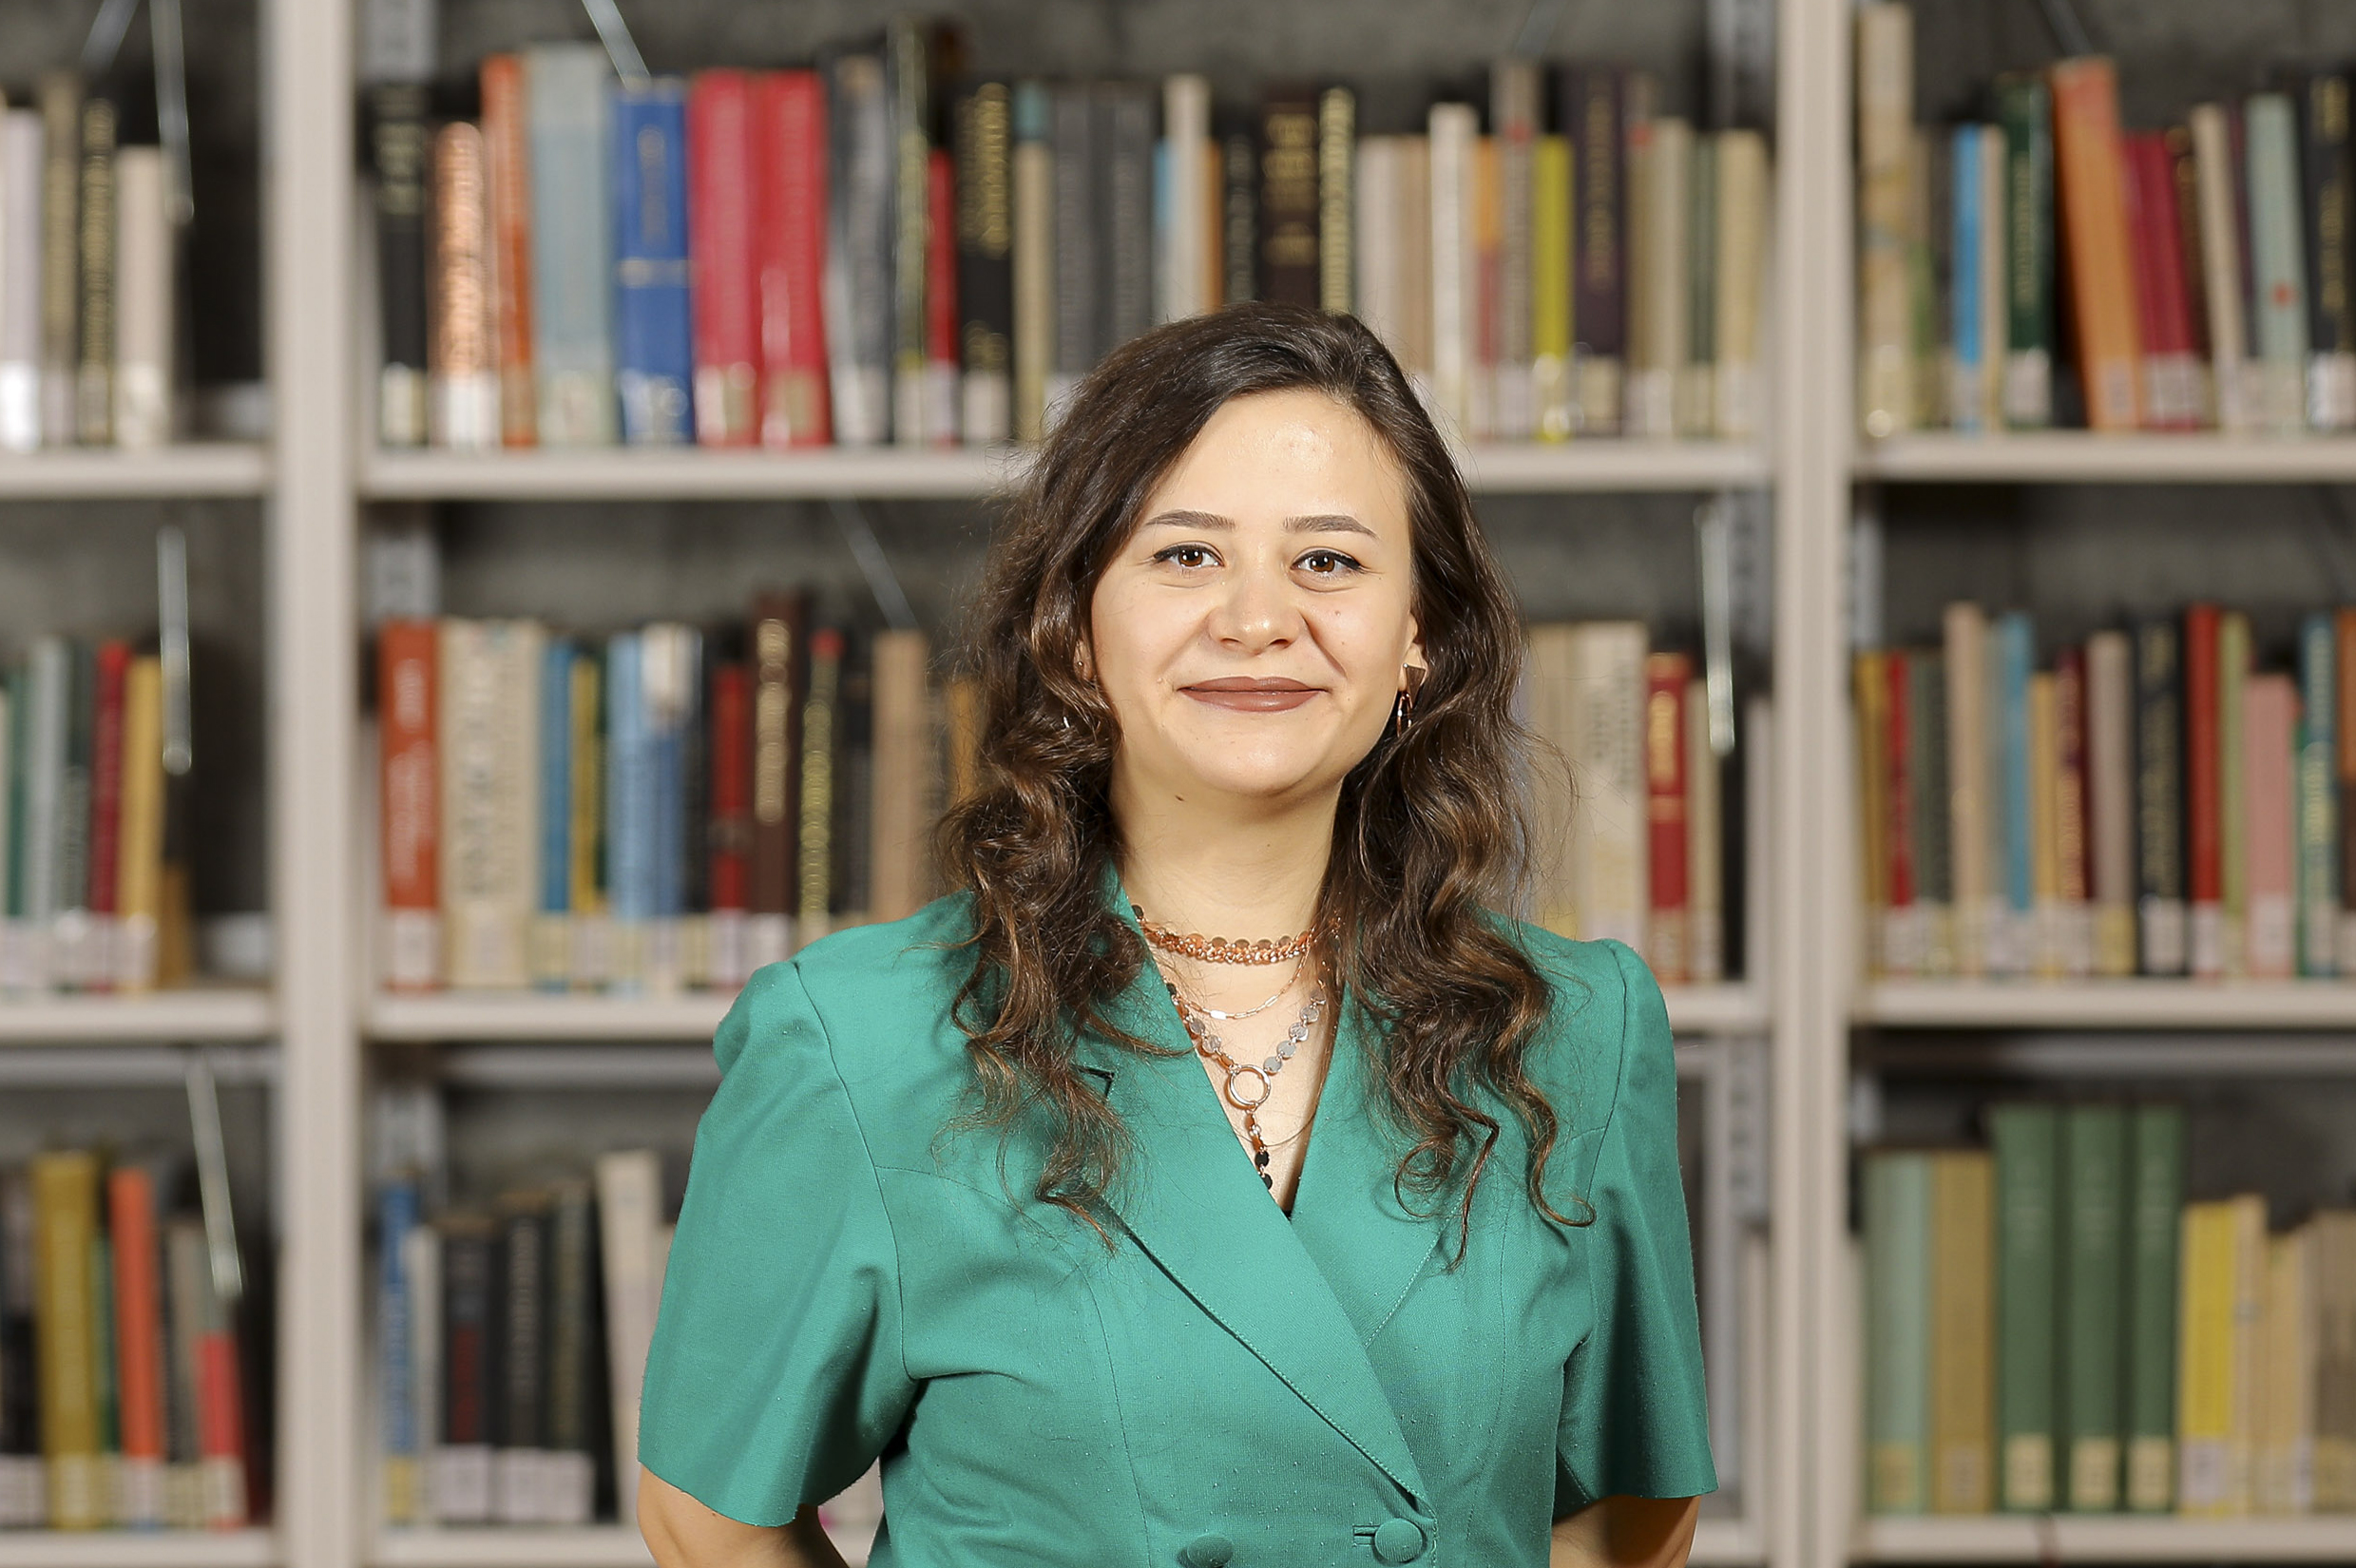 Uzman Kütüphaneci Fatma Akyol